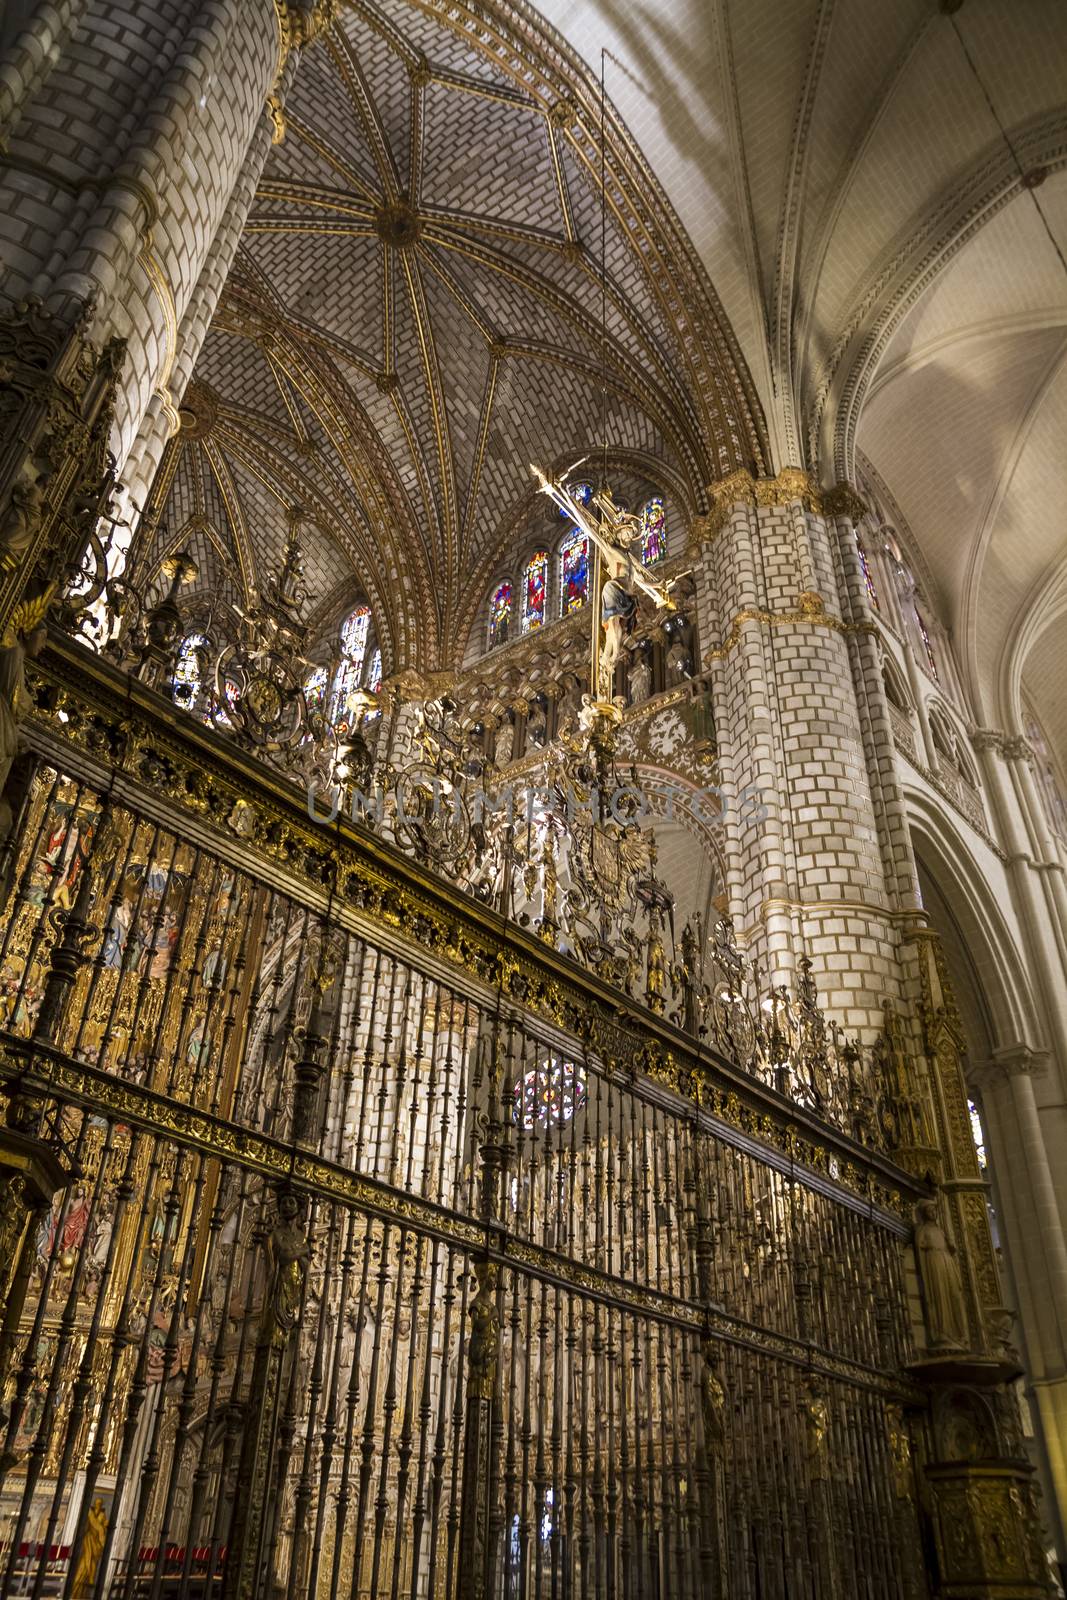 Interior of Toledo Cathedral. Arcs, organ, columns and gothic art. Spain